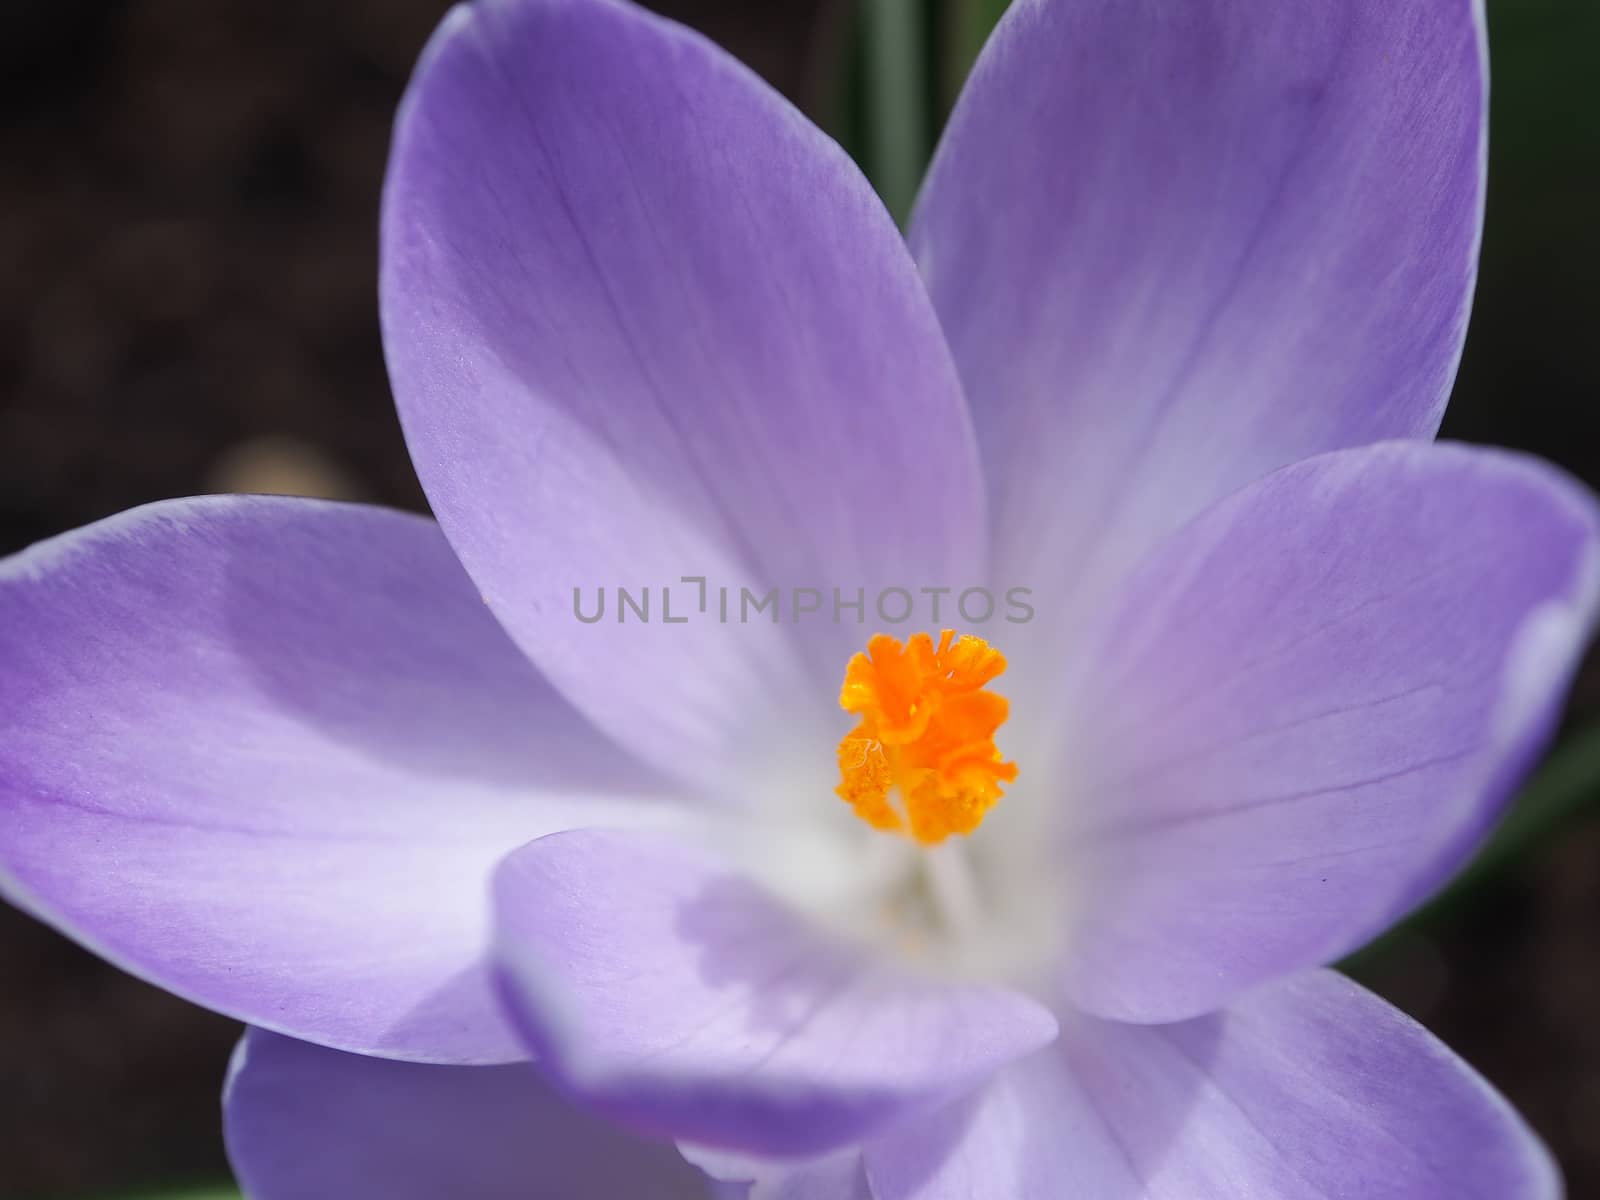 Violet, yellow, white crocuses, Crocus sativus, Crocus tommasinianus bloom at the Keukenhof Gardens in the Netherlands.